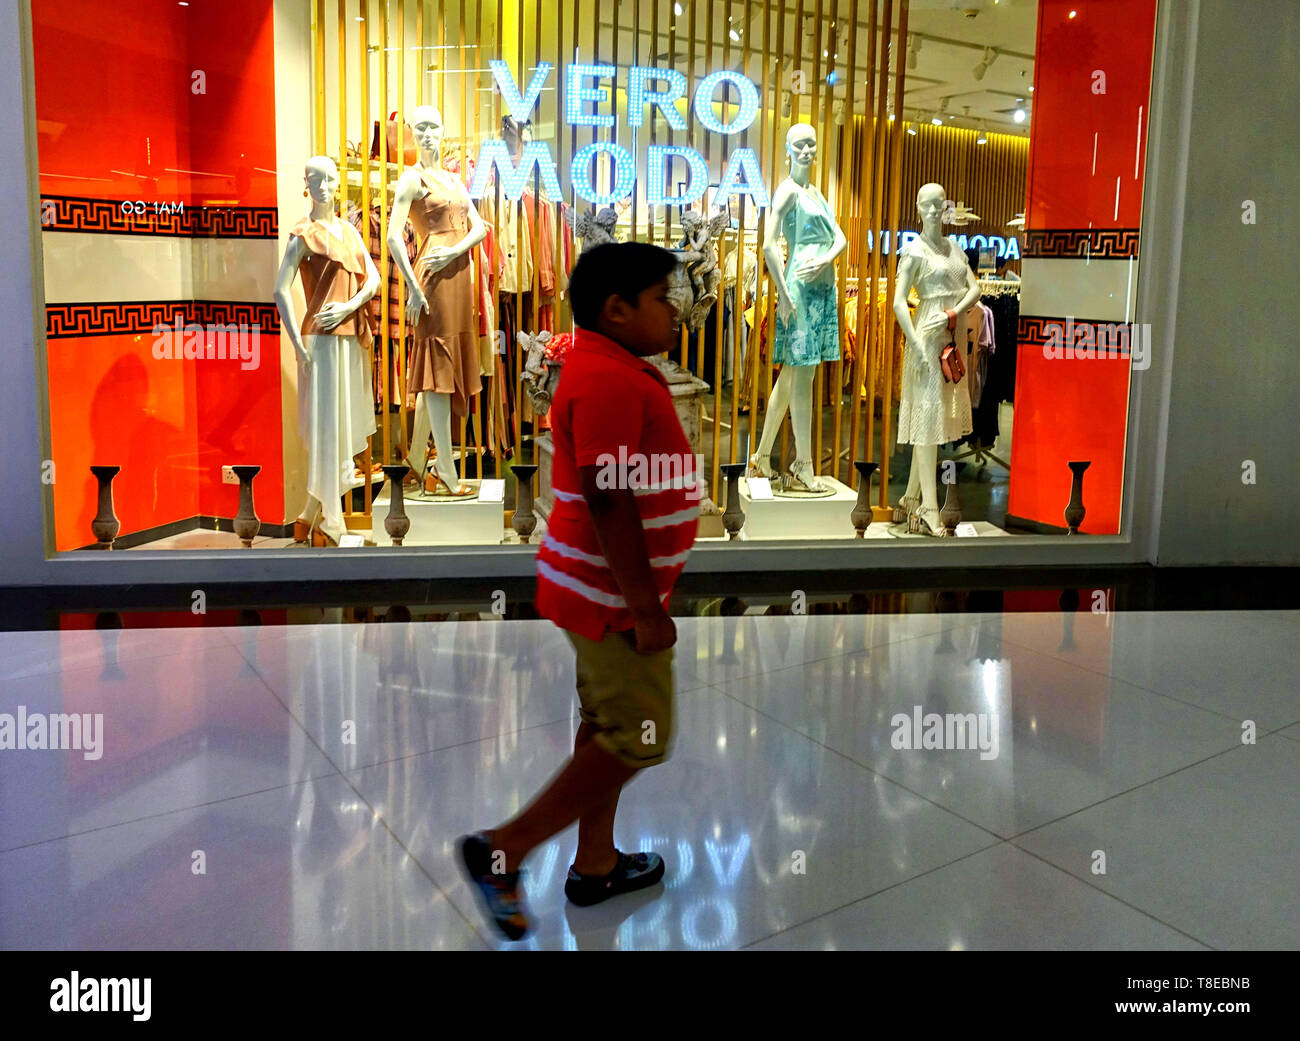 Kolkata, WEST BENGAL, India. 12th May, 2019. A teenager seen walking in front of MODA garments store at the South City Mall in Kolkata. Credit: Avishek Das/SOPA Images/ZUMA Wire/Alamy Live News